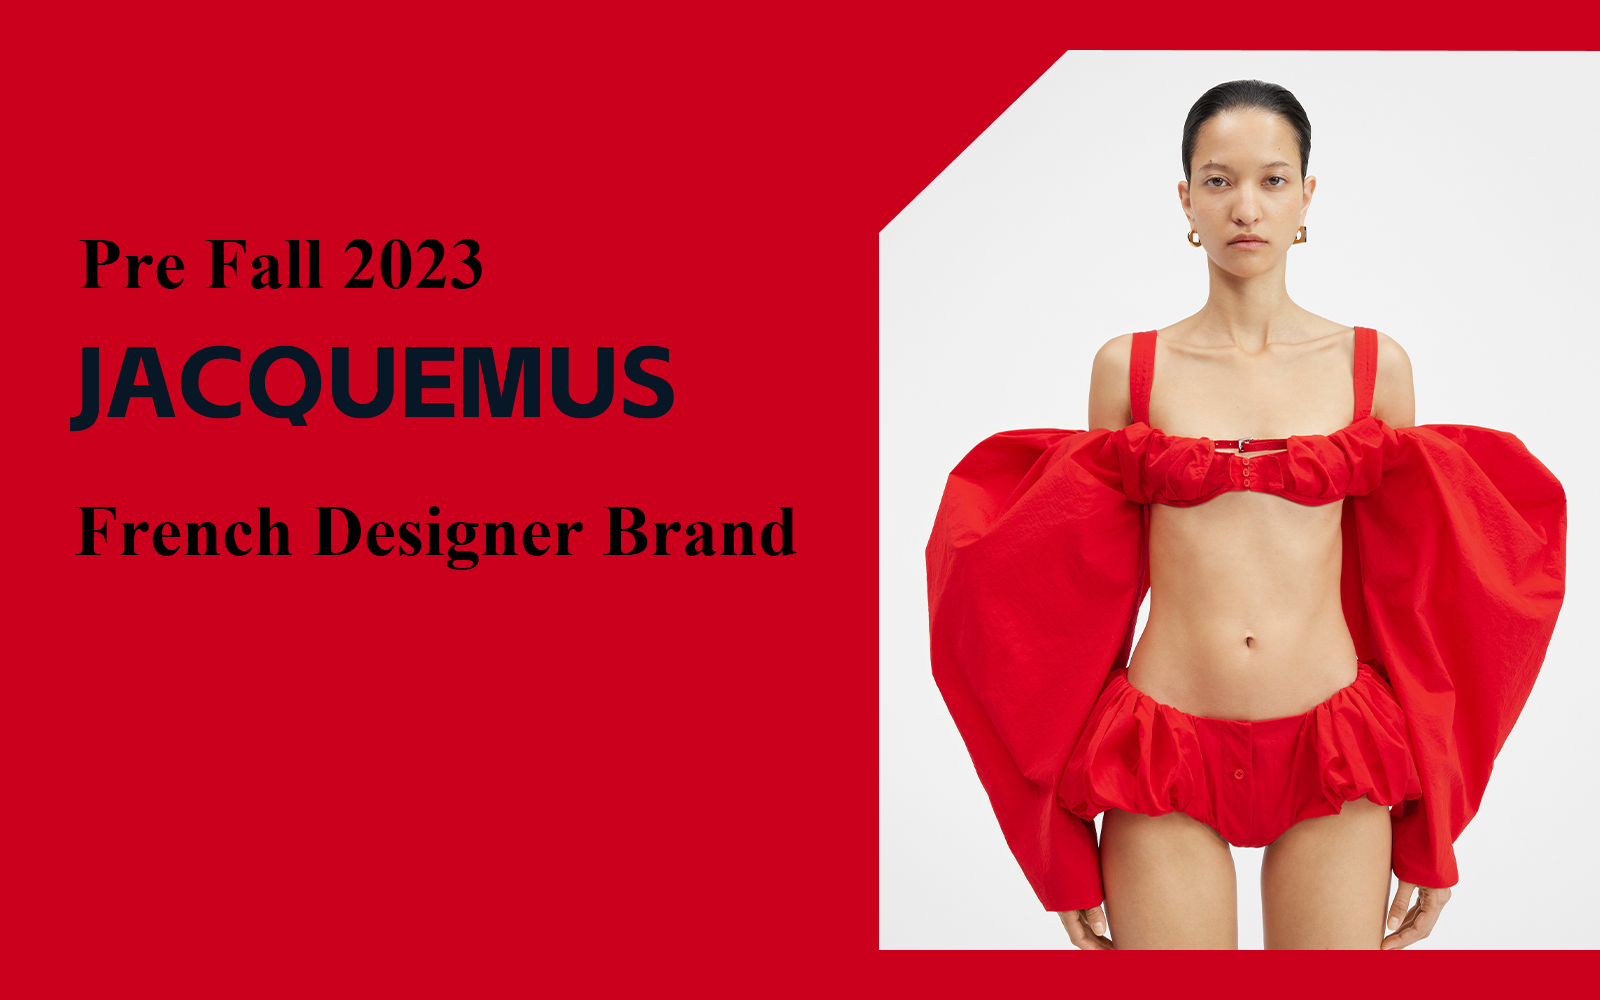 French Romance -- The Analysis of JACQUEMUS The Womenswear Designer Brand